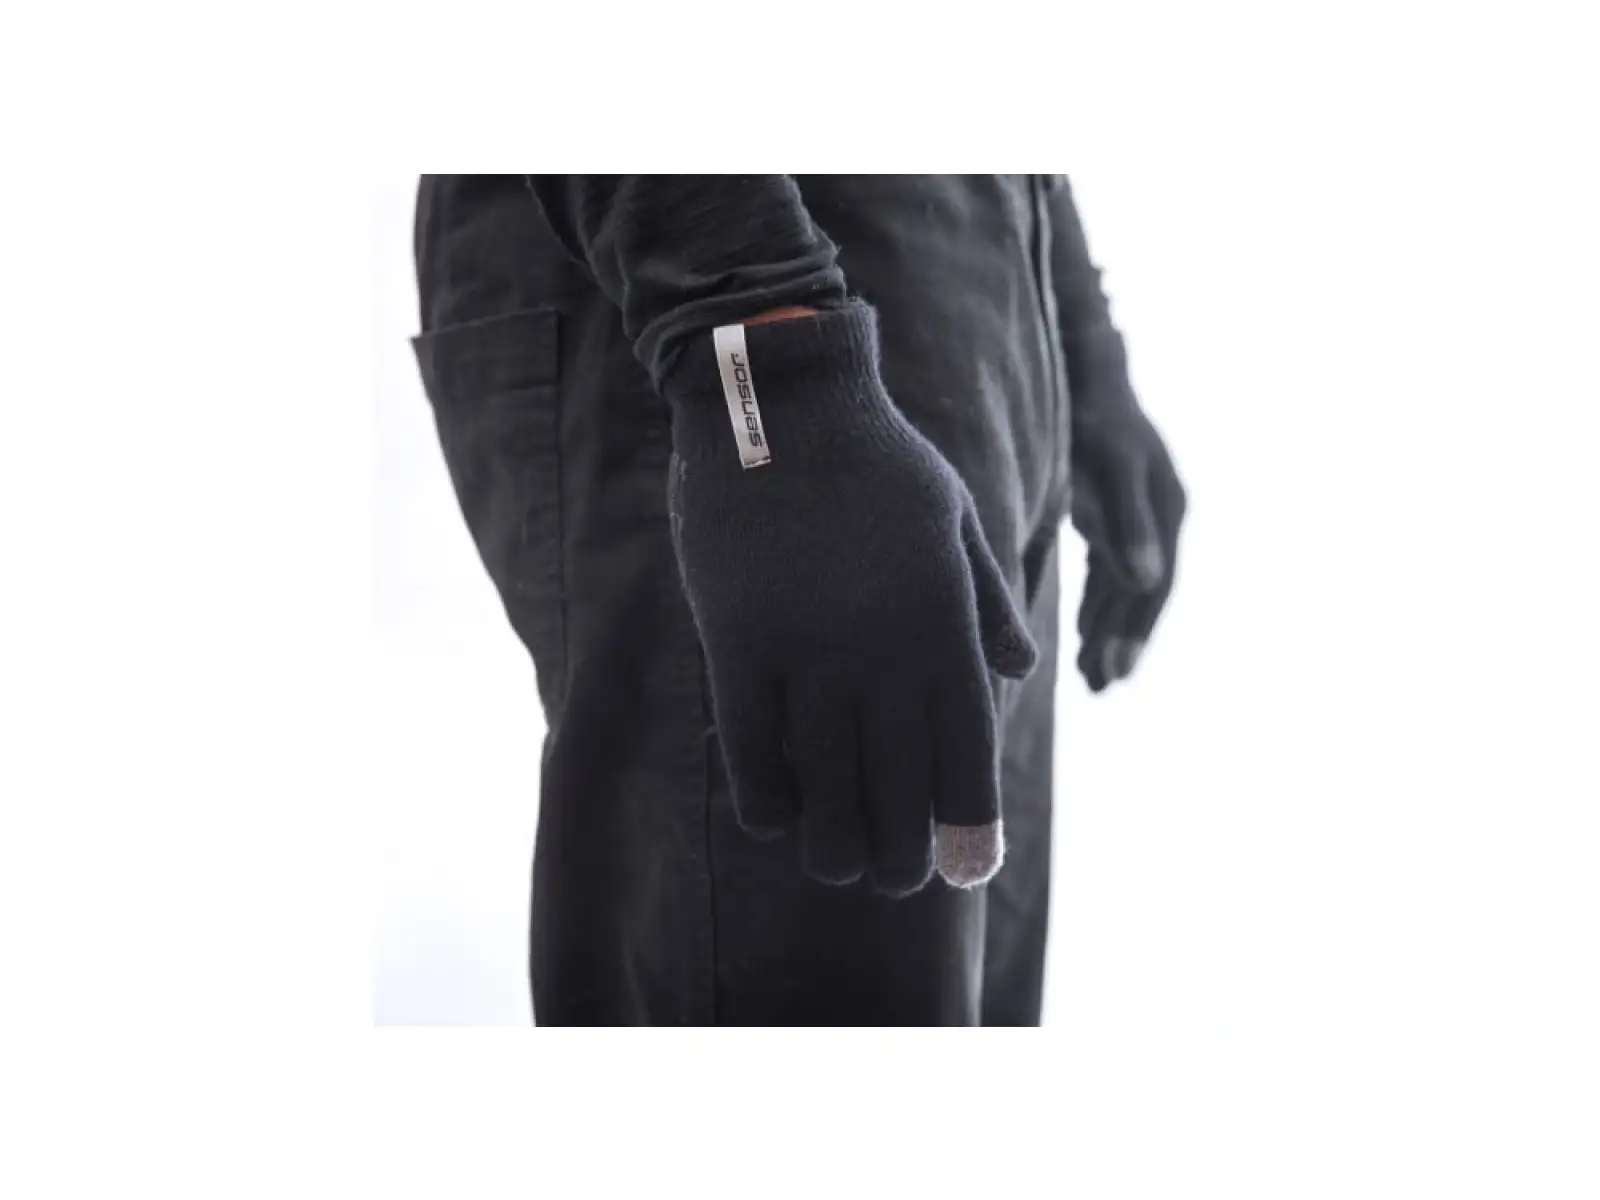 Sensor Merino rukavice černá